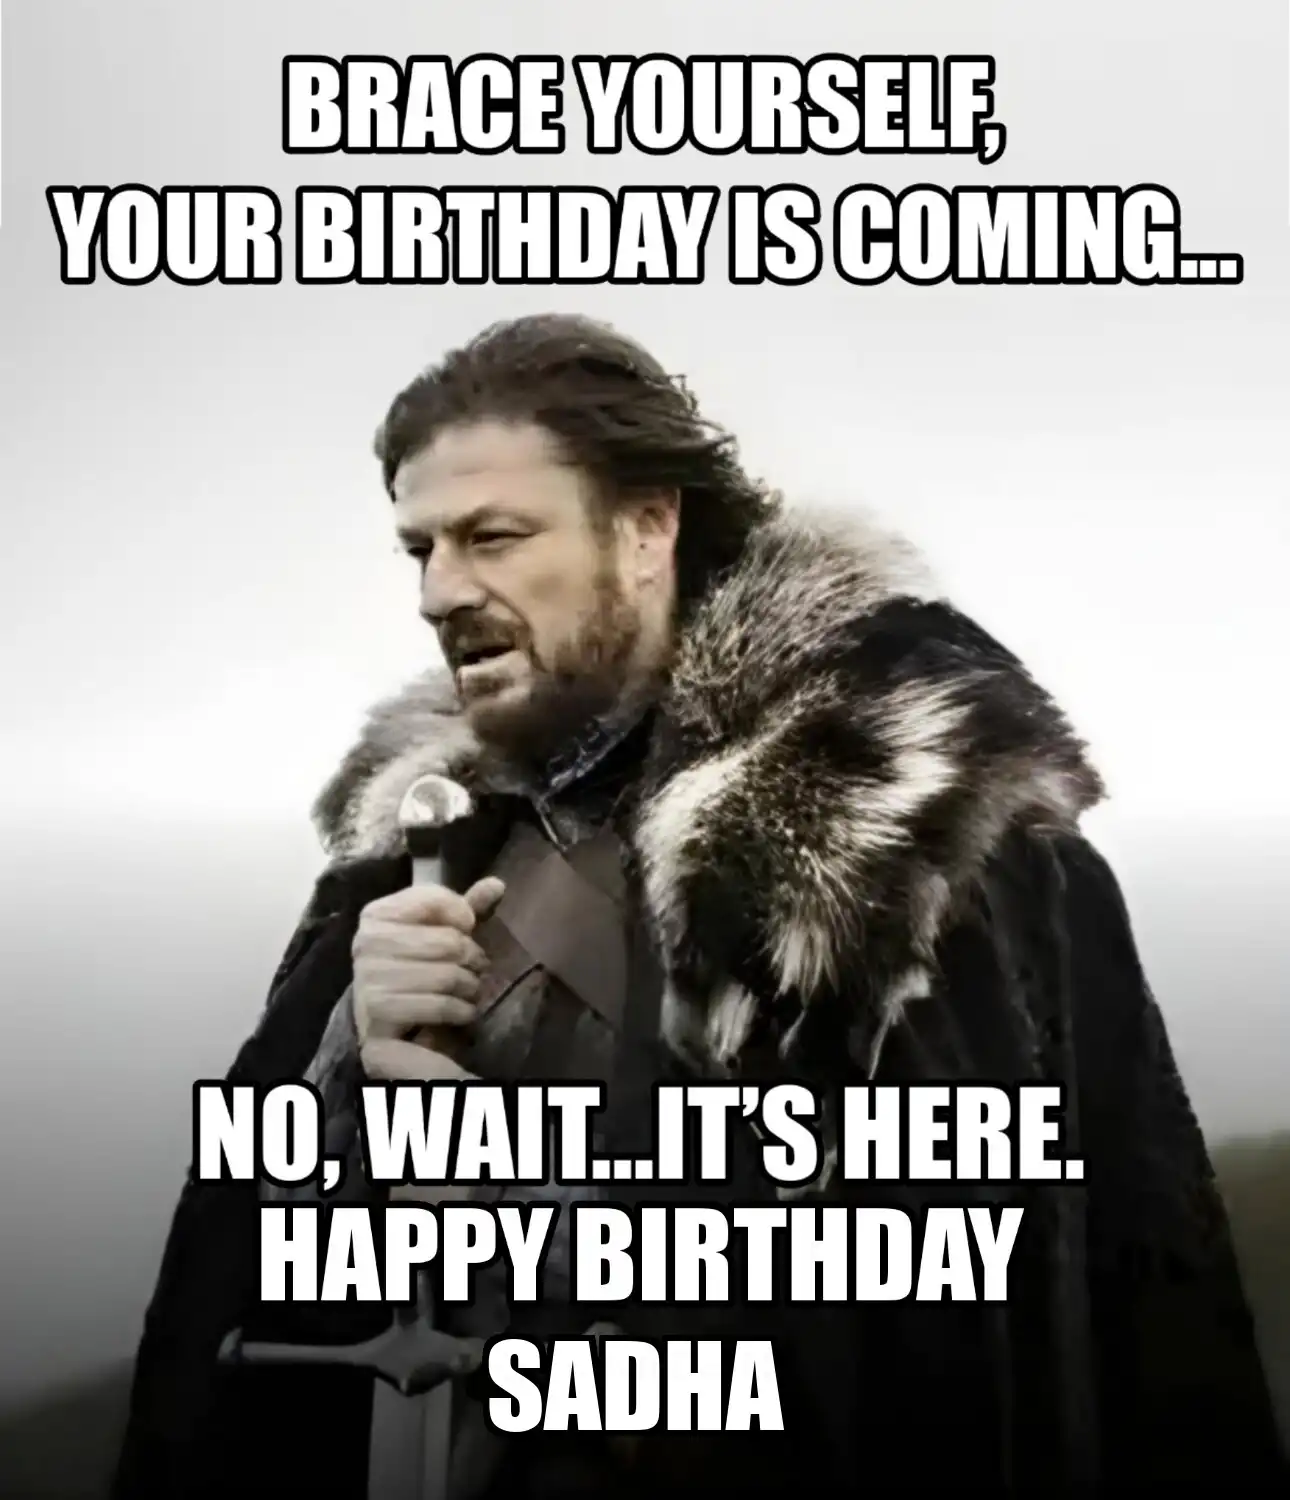 Happy Birthday Sadha Brace Yourself Your Birthday Is Coming Meme